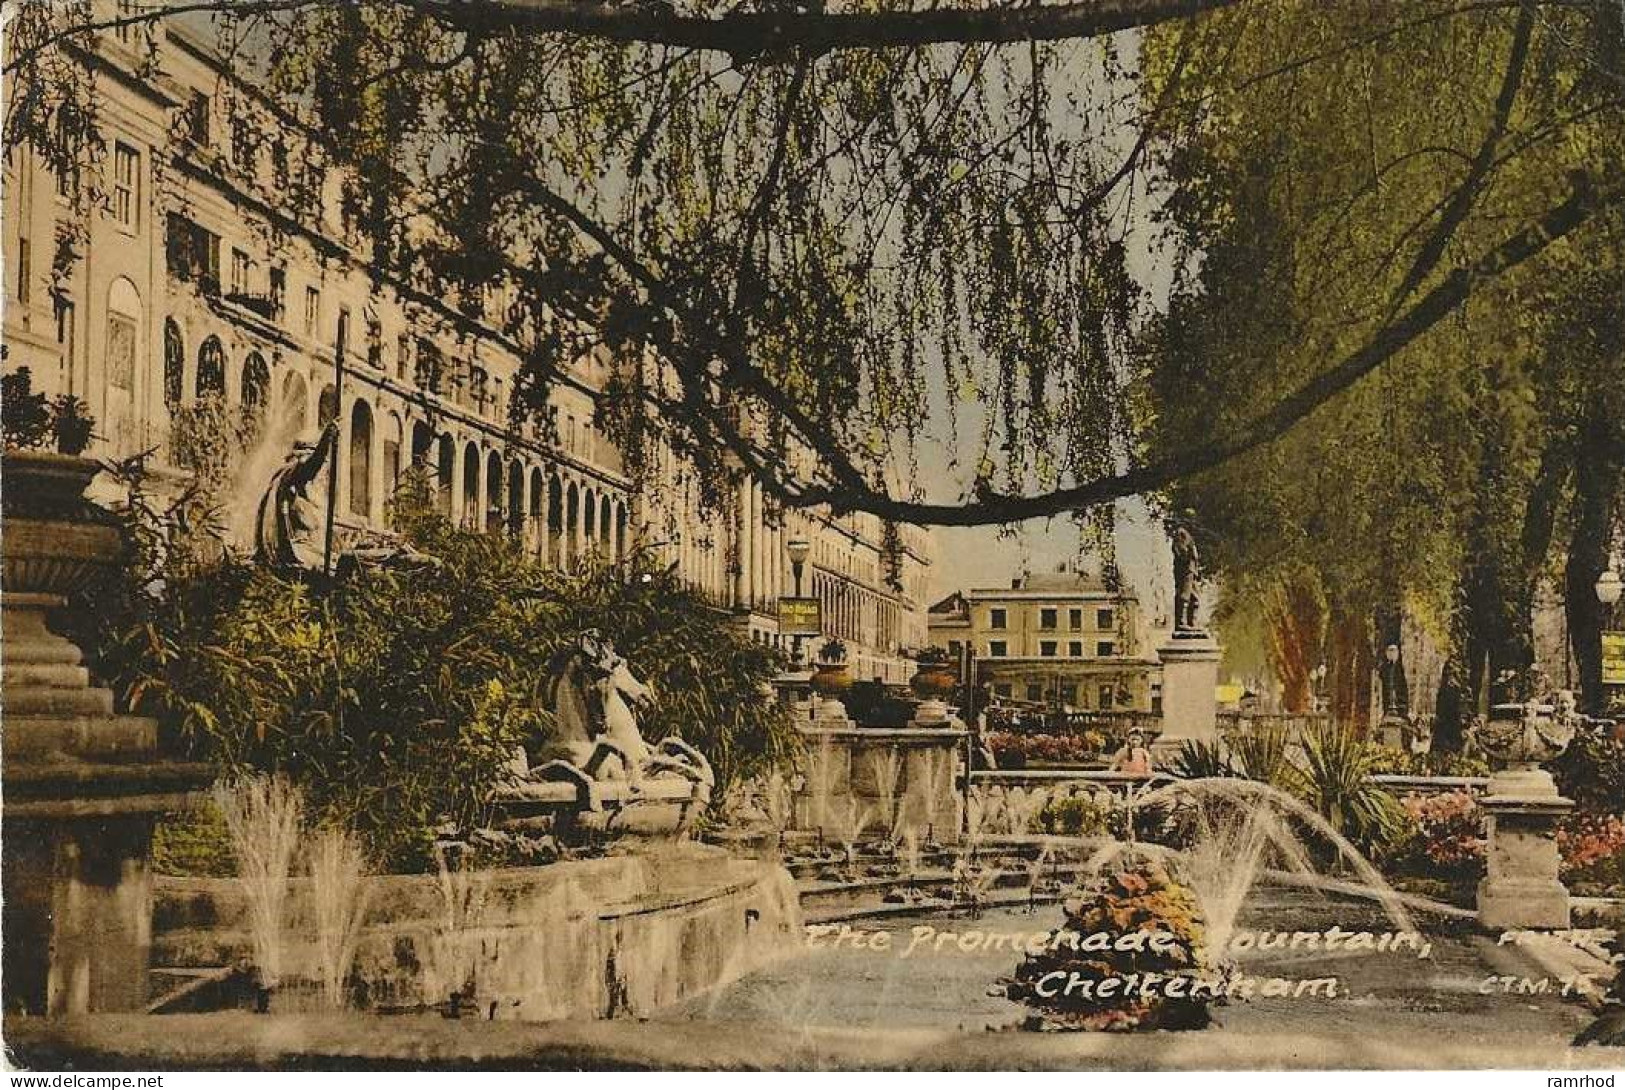 CHELTENHAM, The Promenade Fountain (Publisher - Frith's) Date - August 1963, Unused (Vintage) - Cheltenham